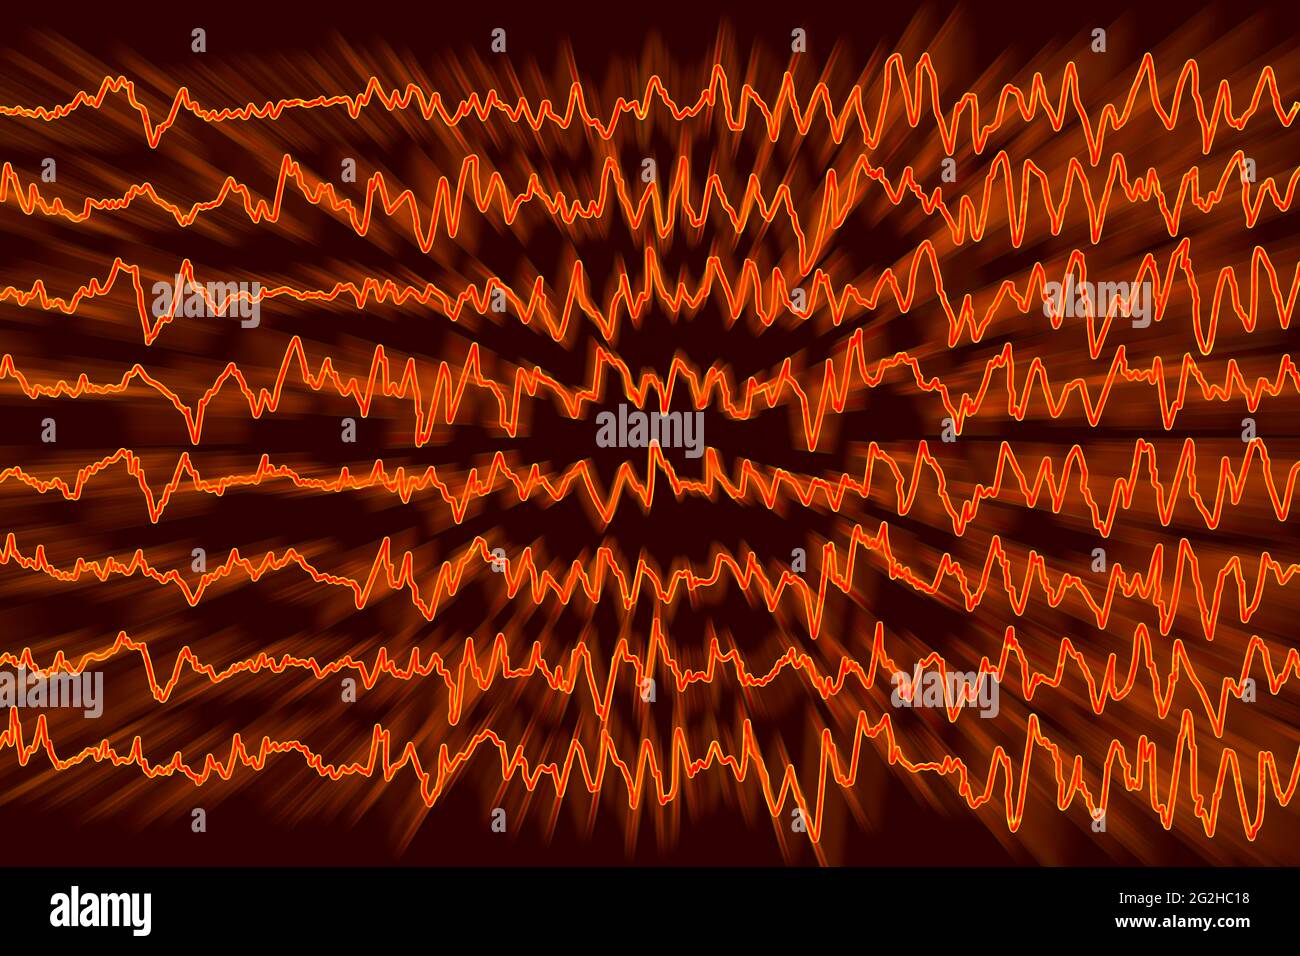 Brain waves in migraine, illustration Stock Photo